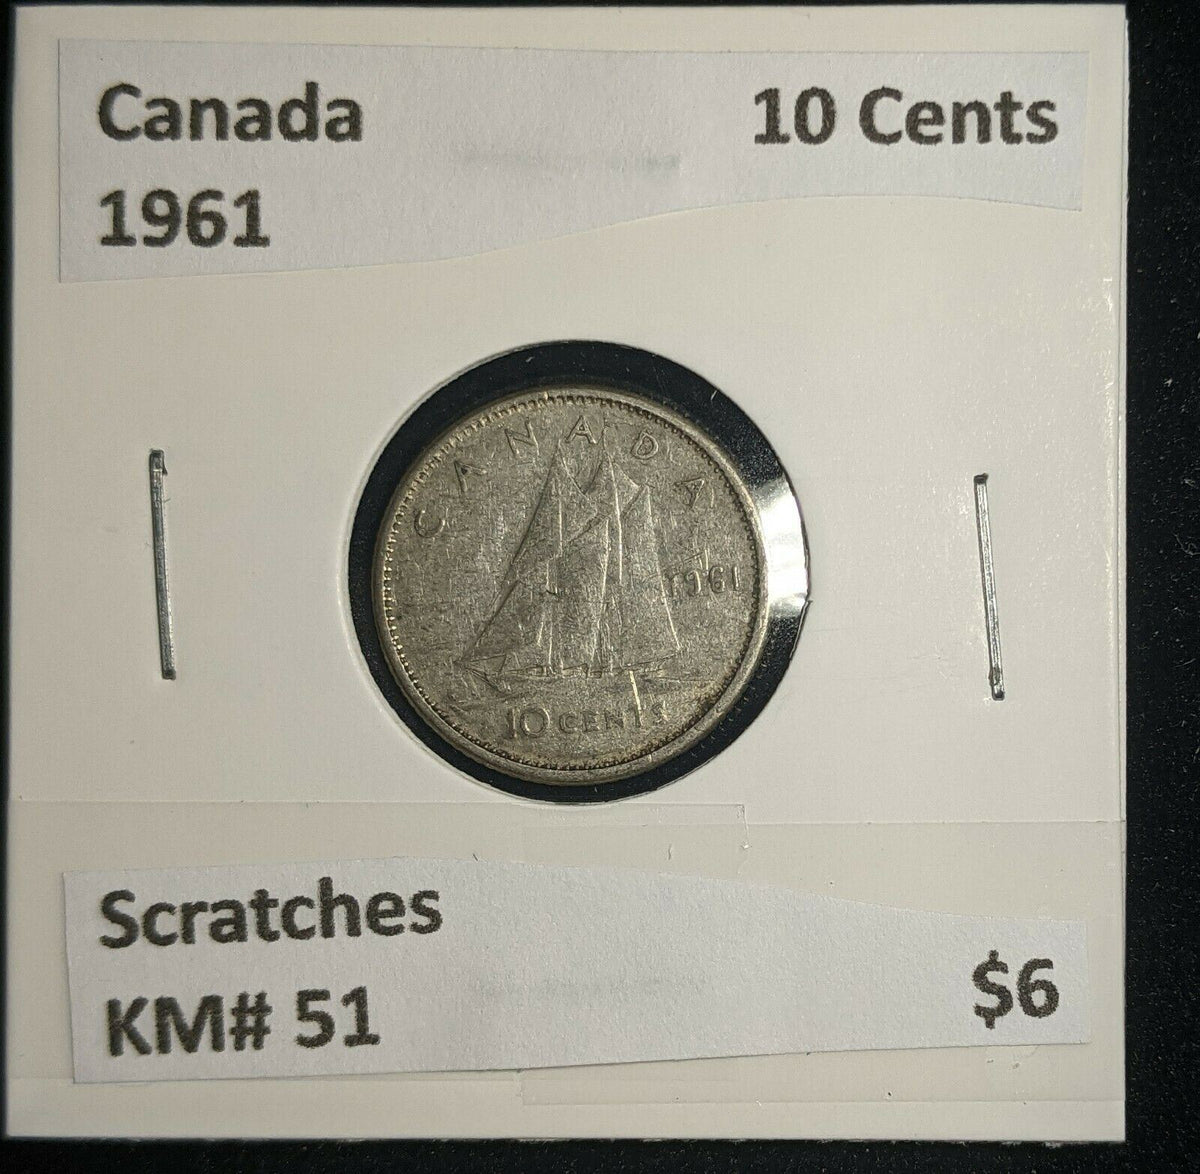 Canada 1961 10 Cents KM# 51 Scratches #501 – aussiecoinsdirect